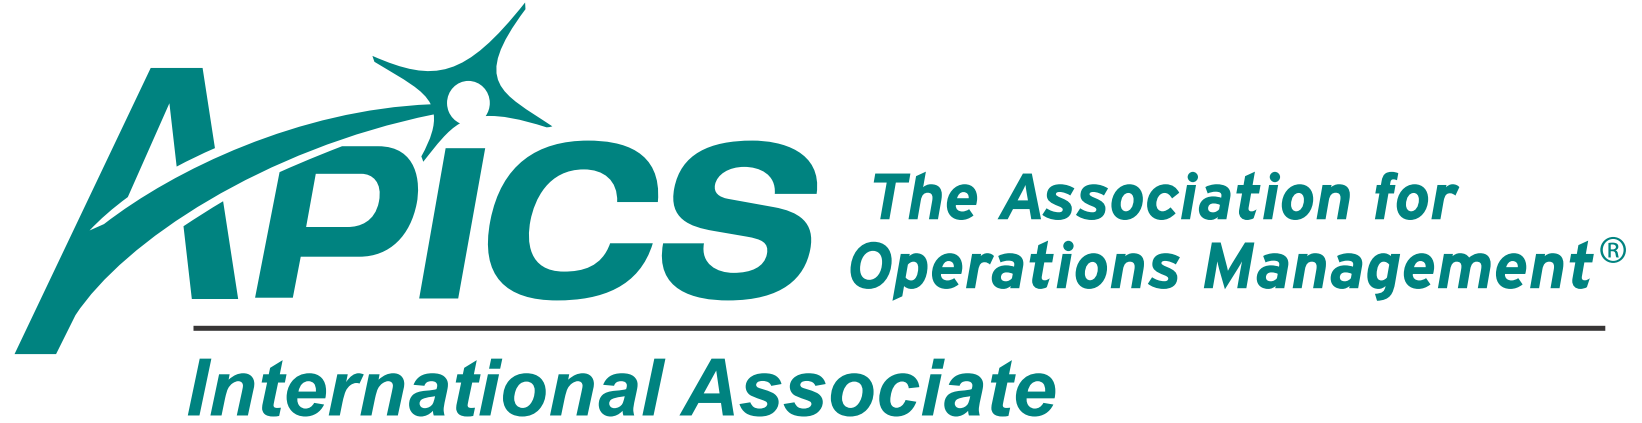 APICS International Associate Logo